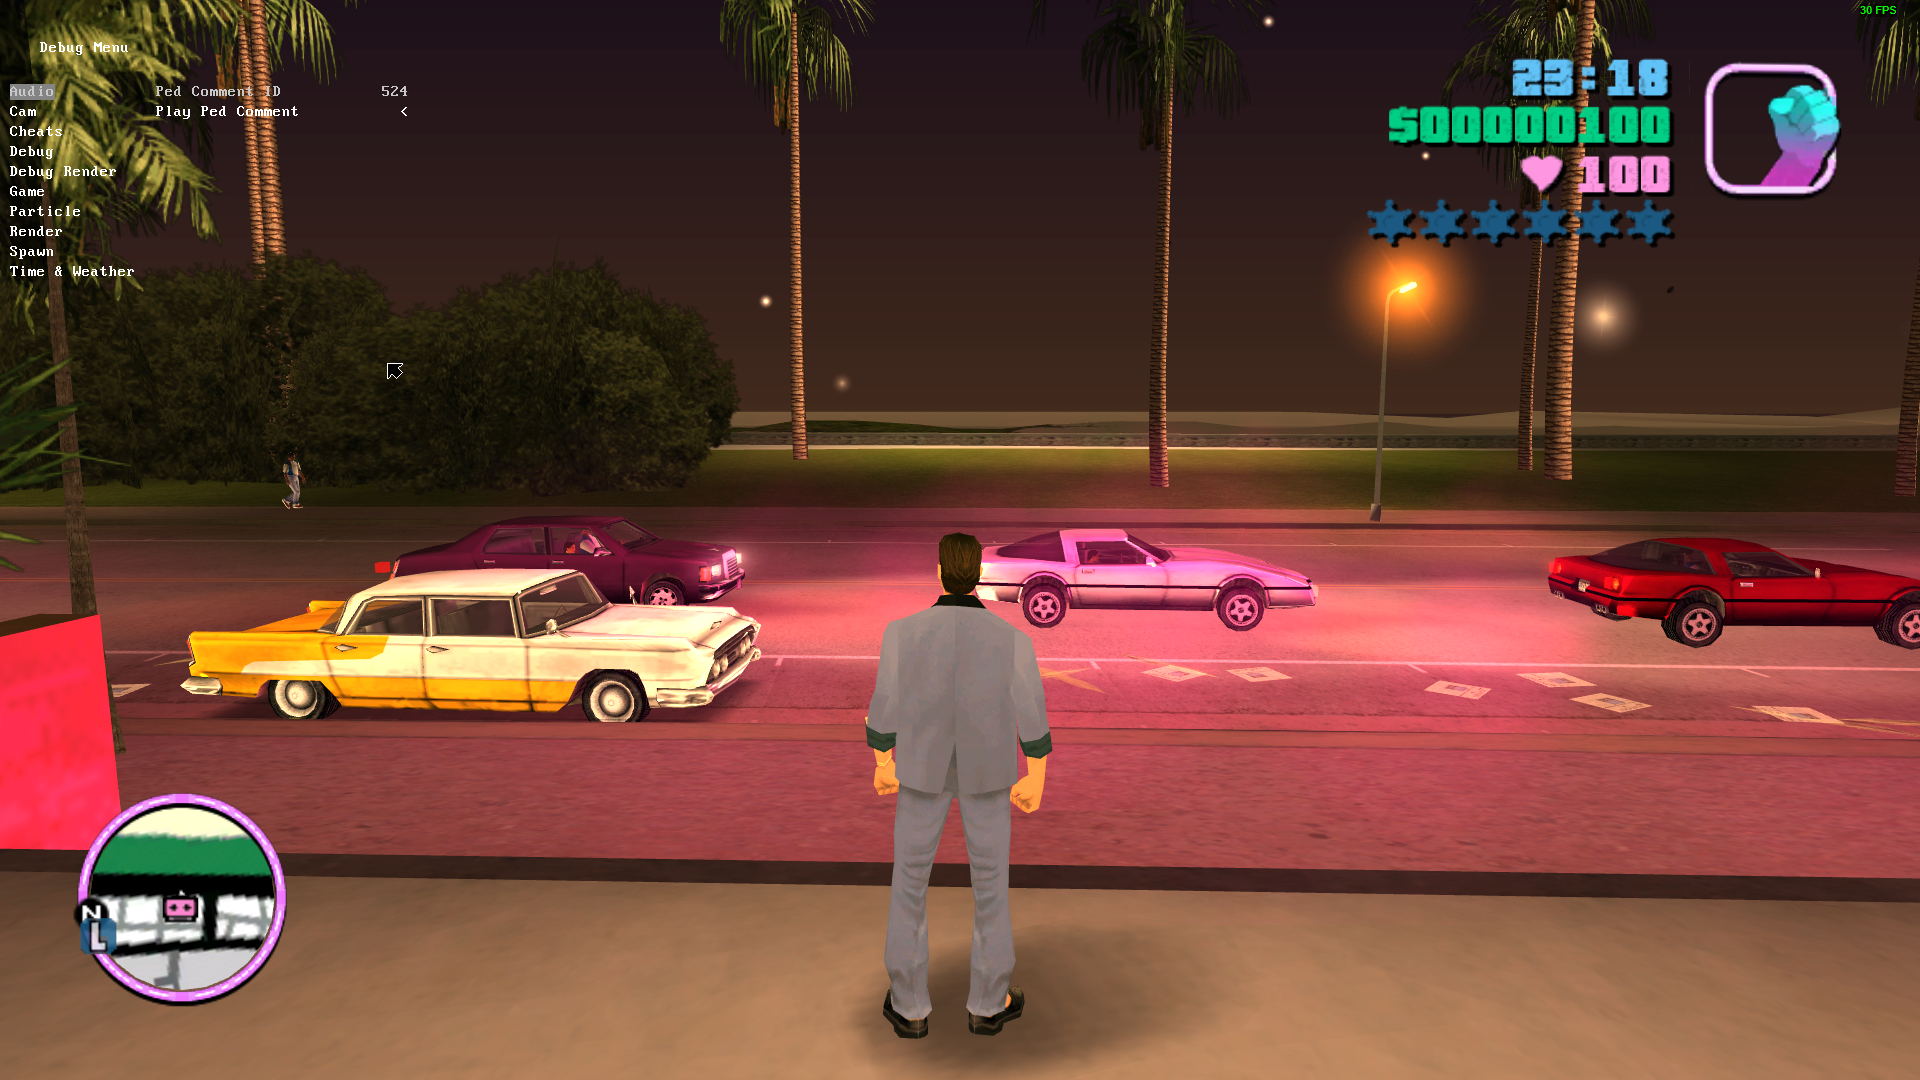 Grand Theft Auto: Liberty City Stories/Debug Menu - The Cutting